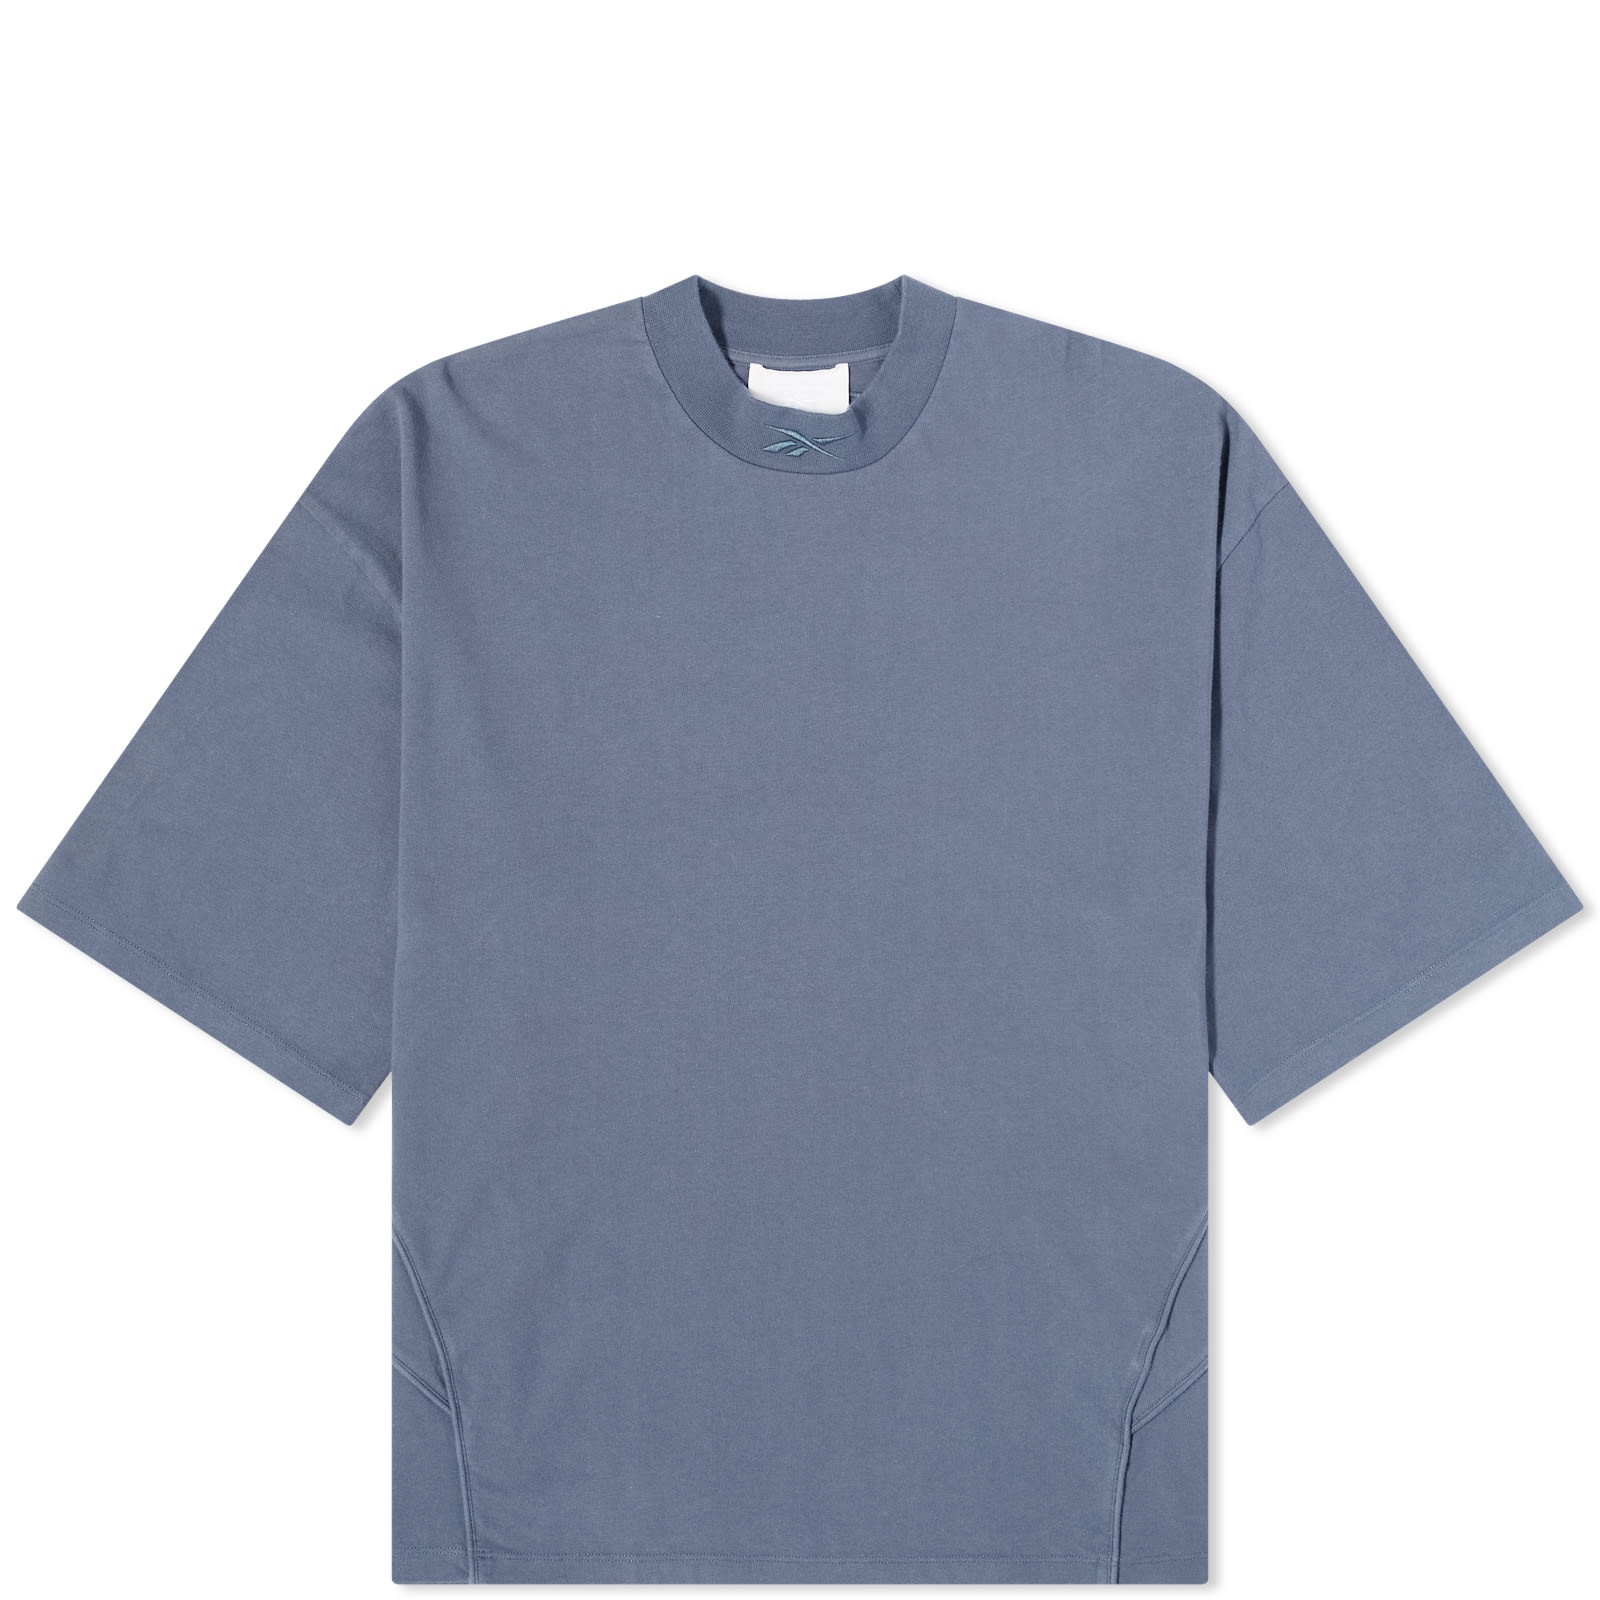 Reebok Piped T-Shirt - 1